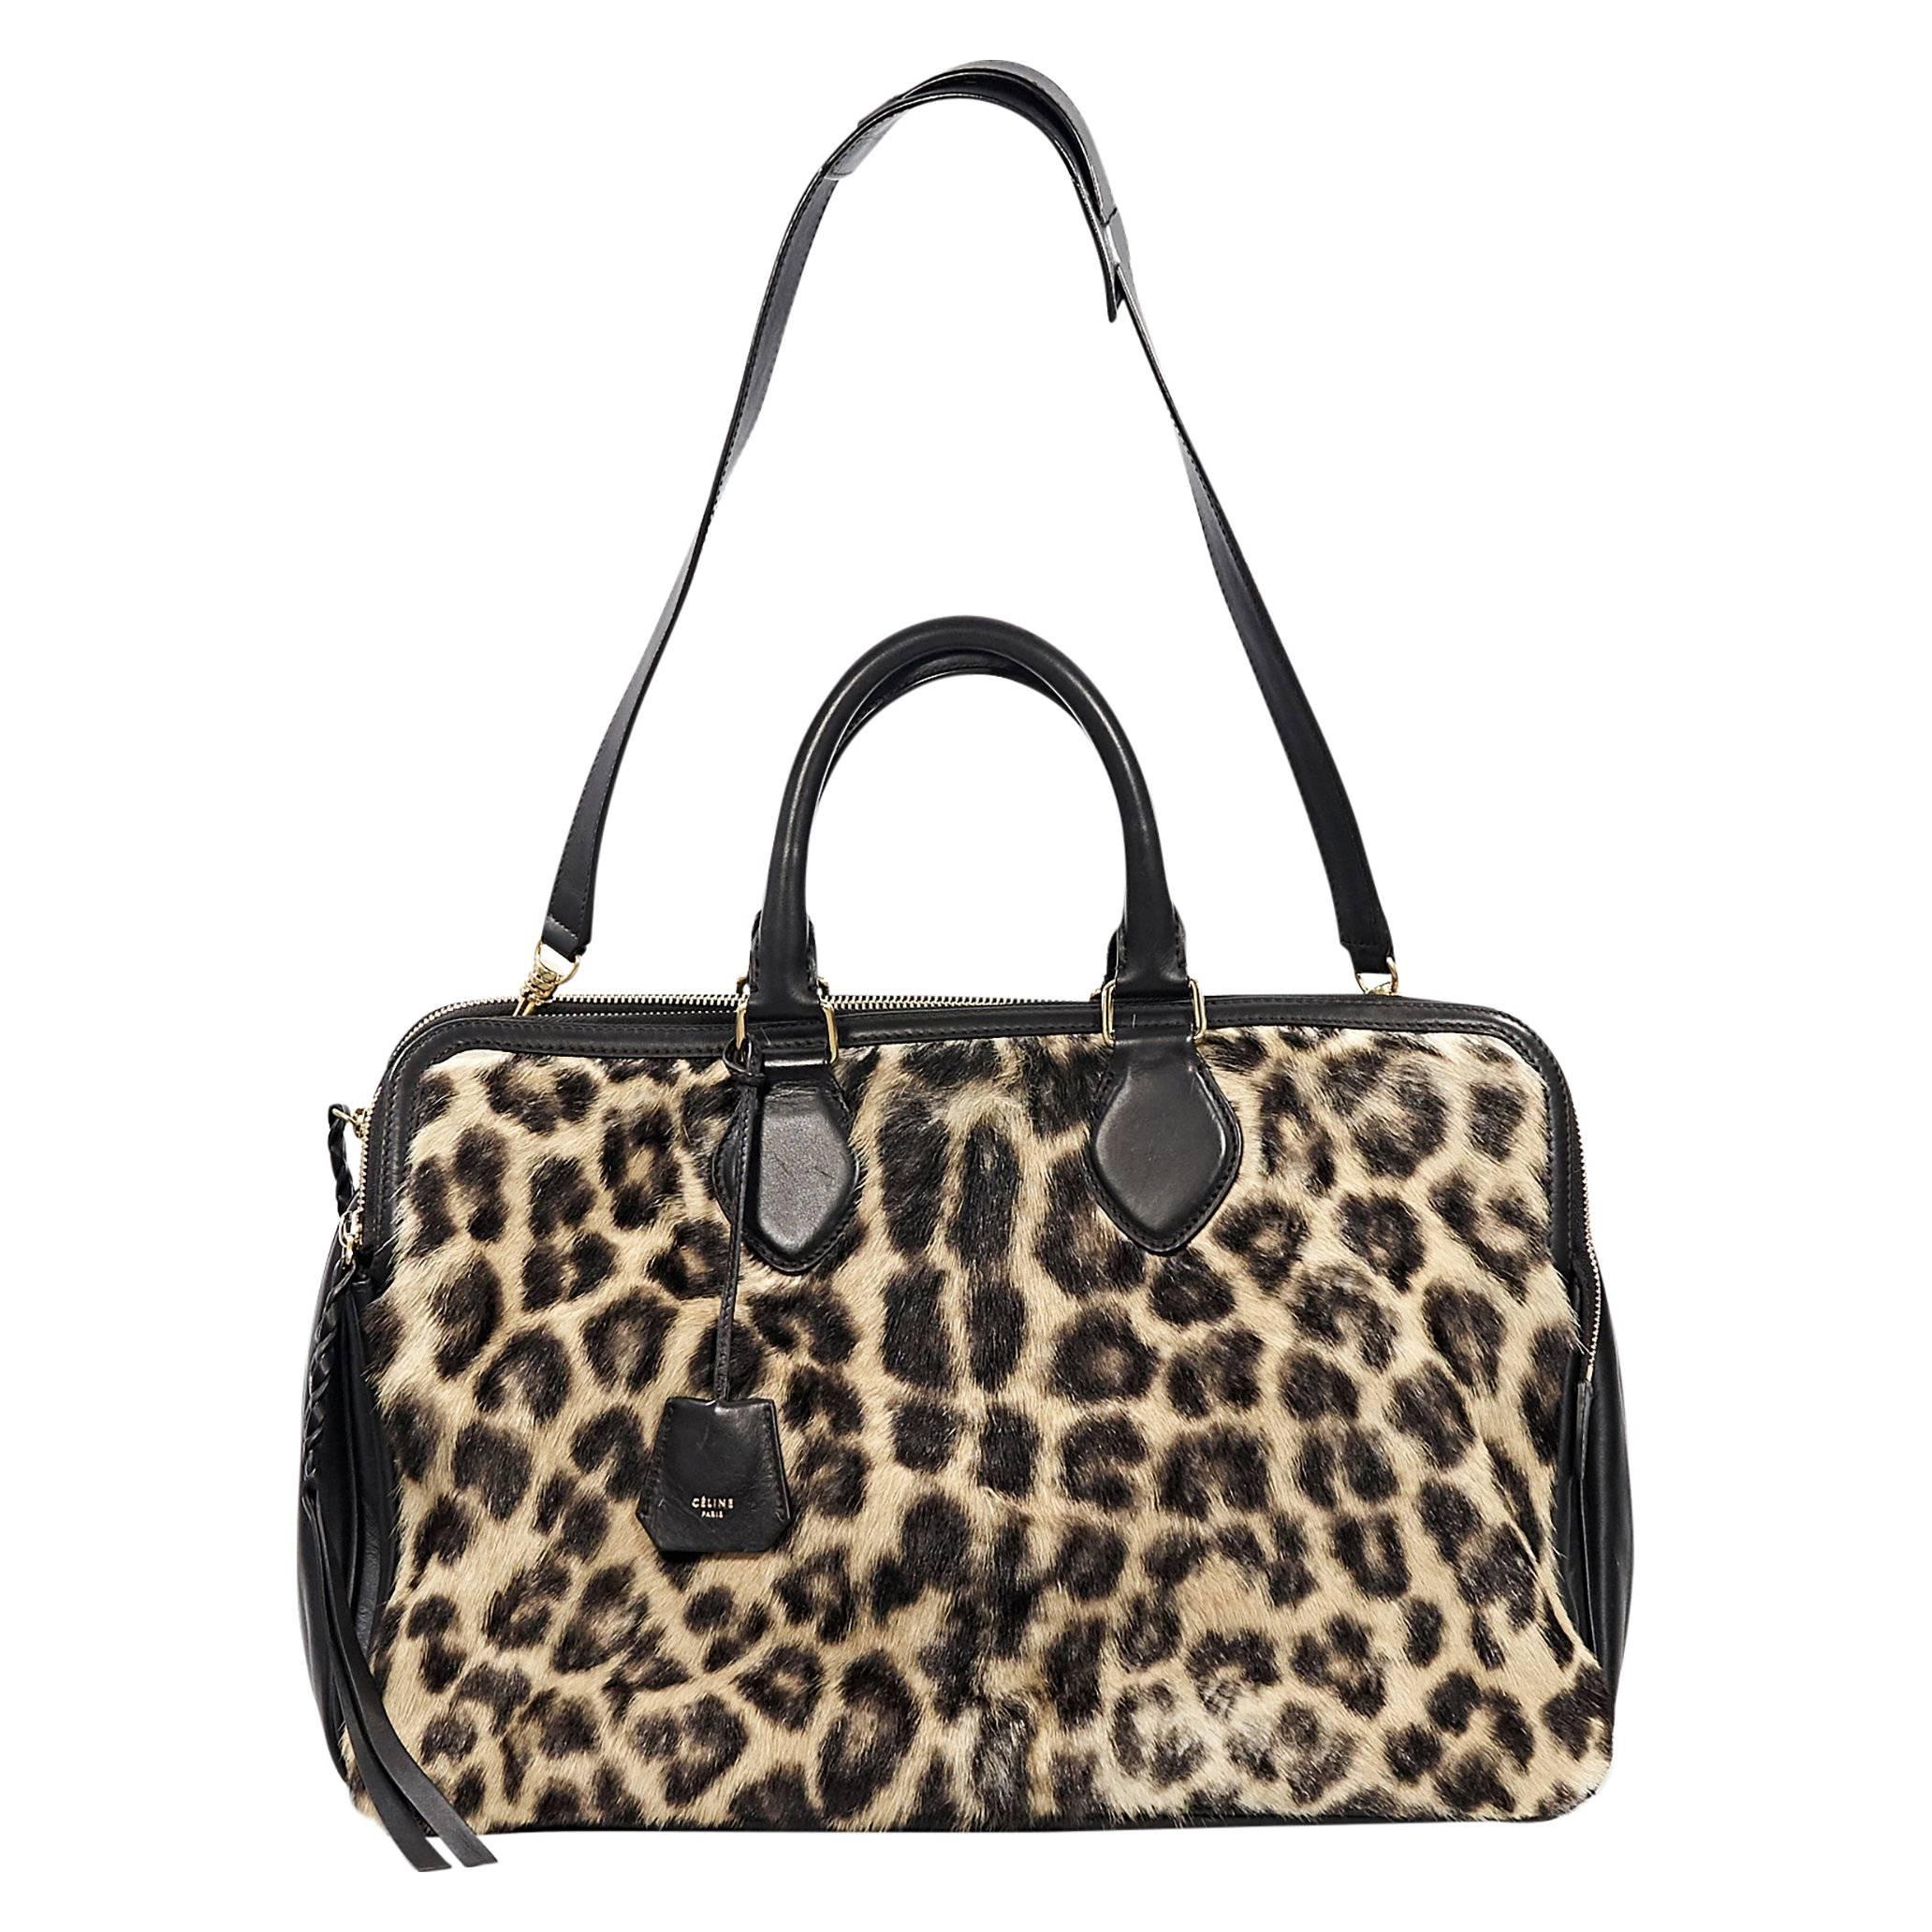 Celine Leopard-Print Fur & Leather Satchel